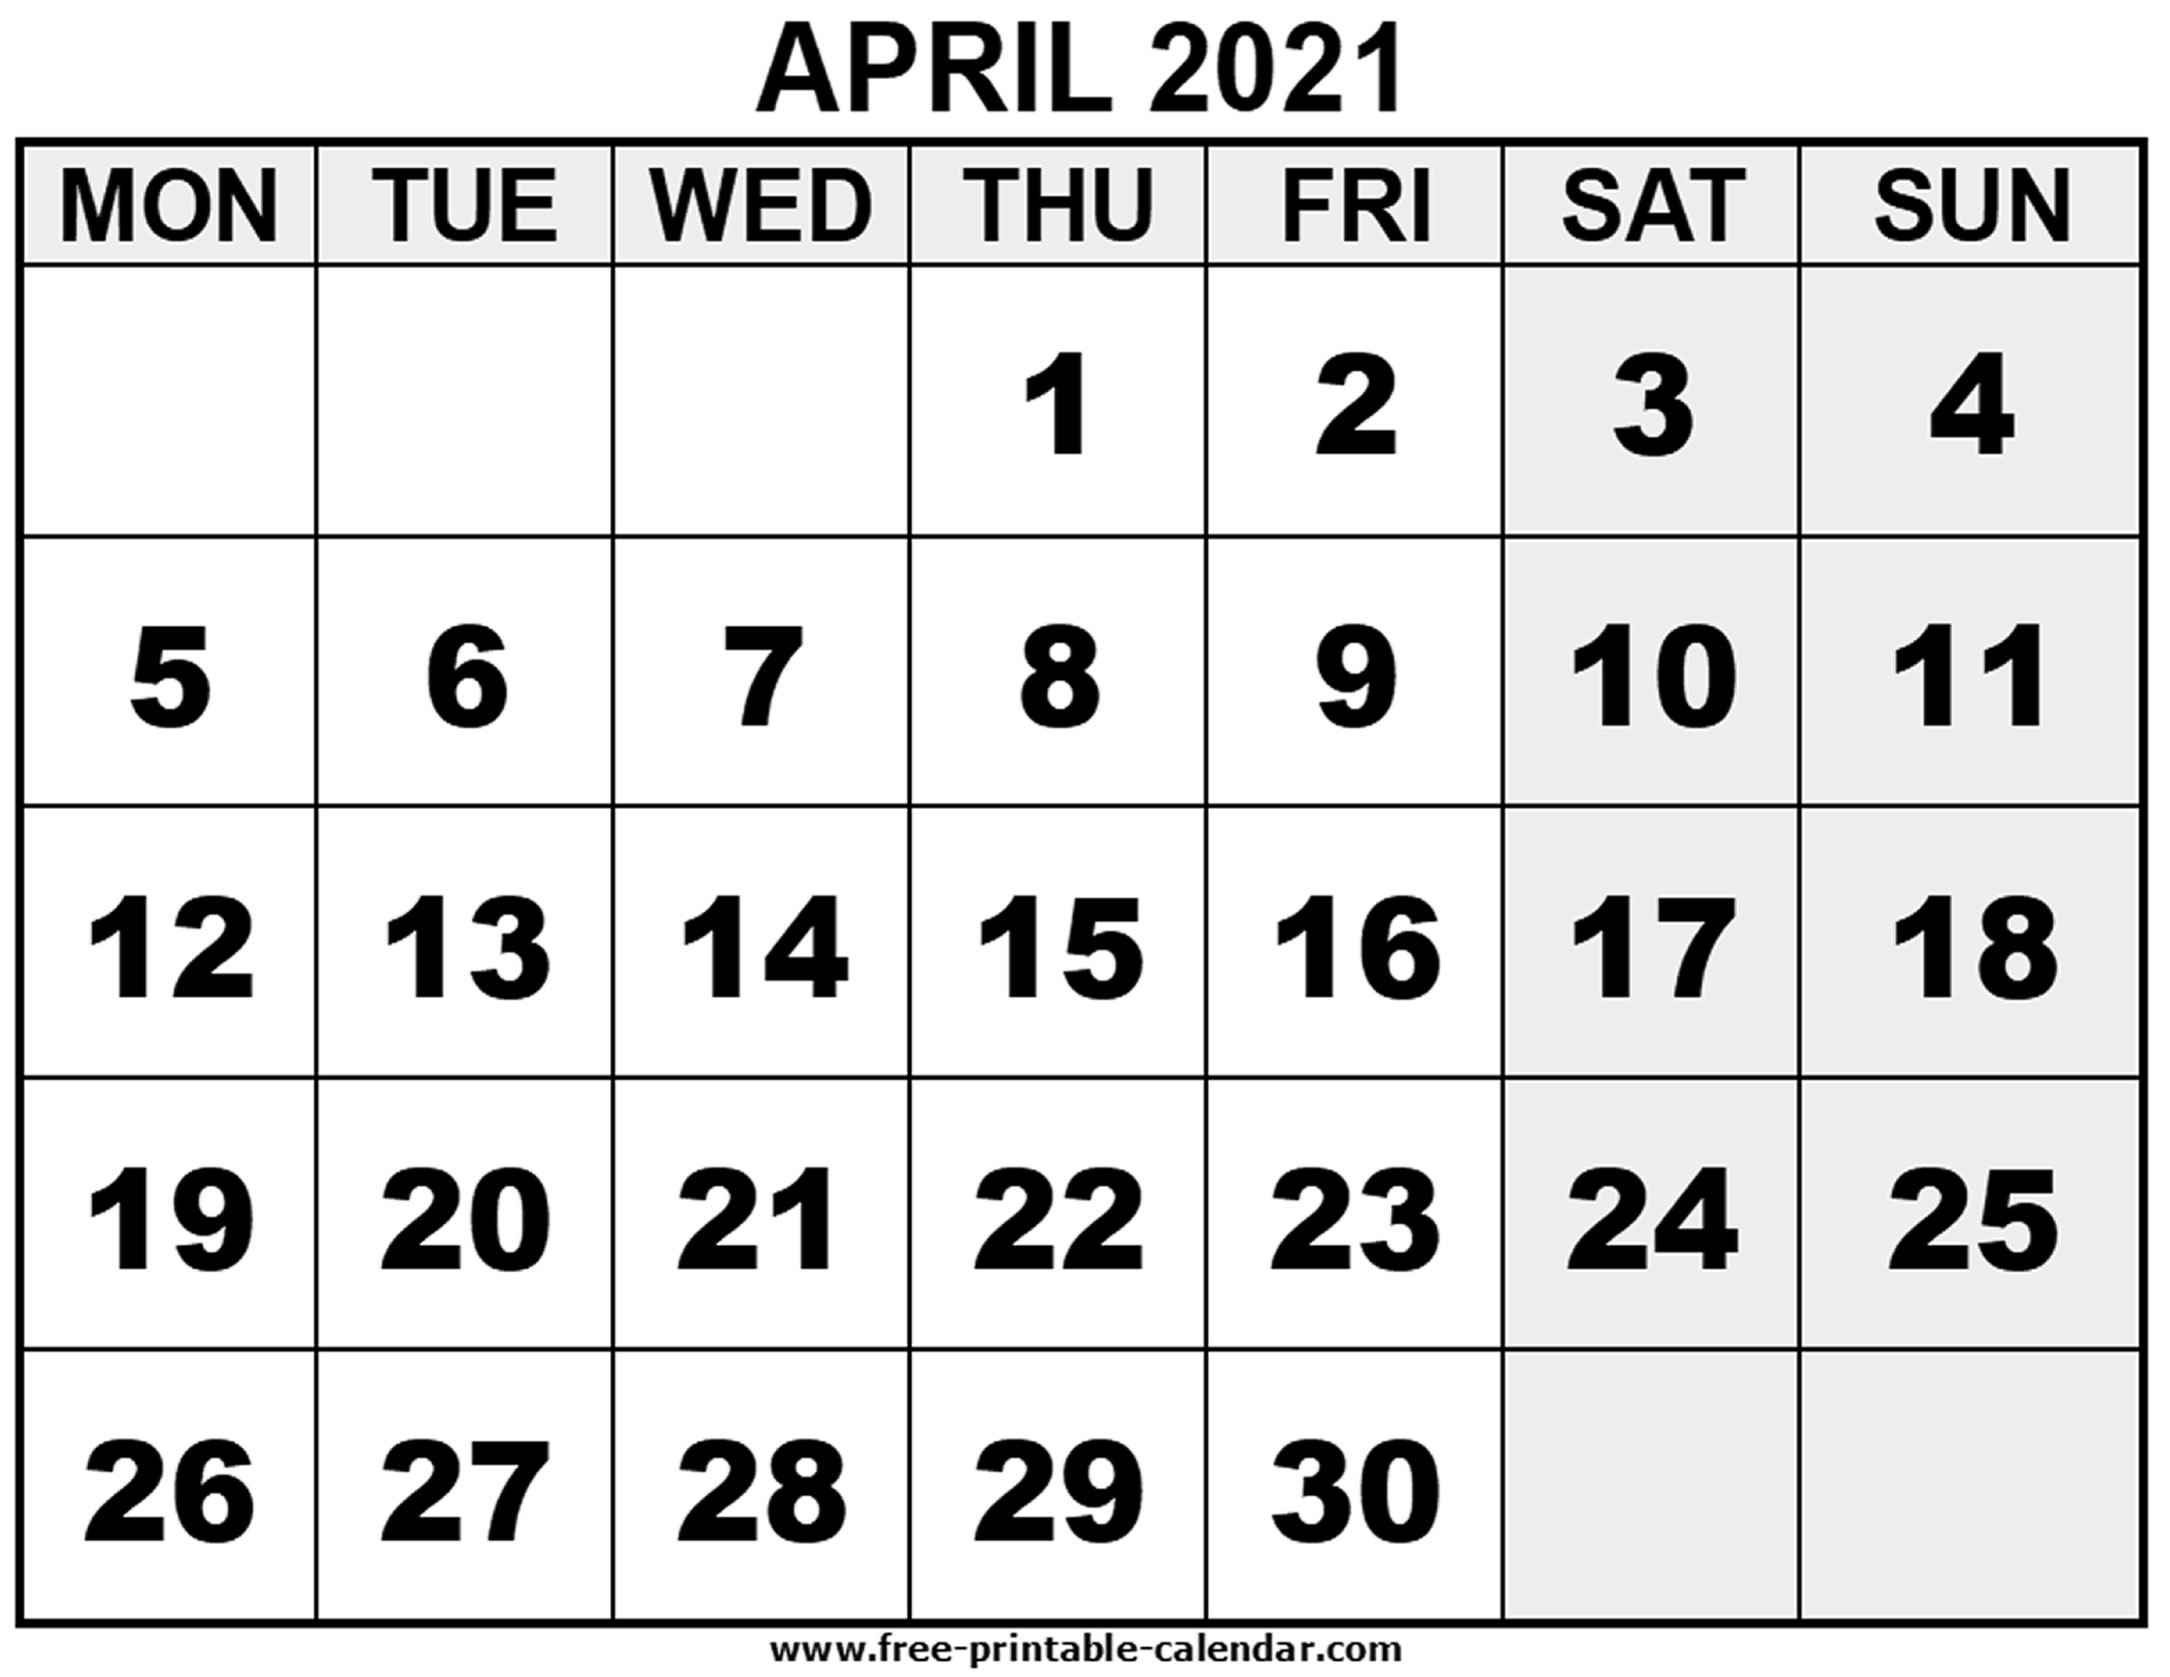 2021 April - Free-Printable-Calendar-Printable Calendar 2021 Large Font